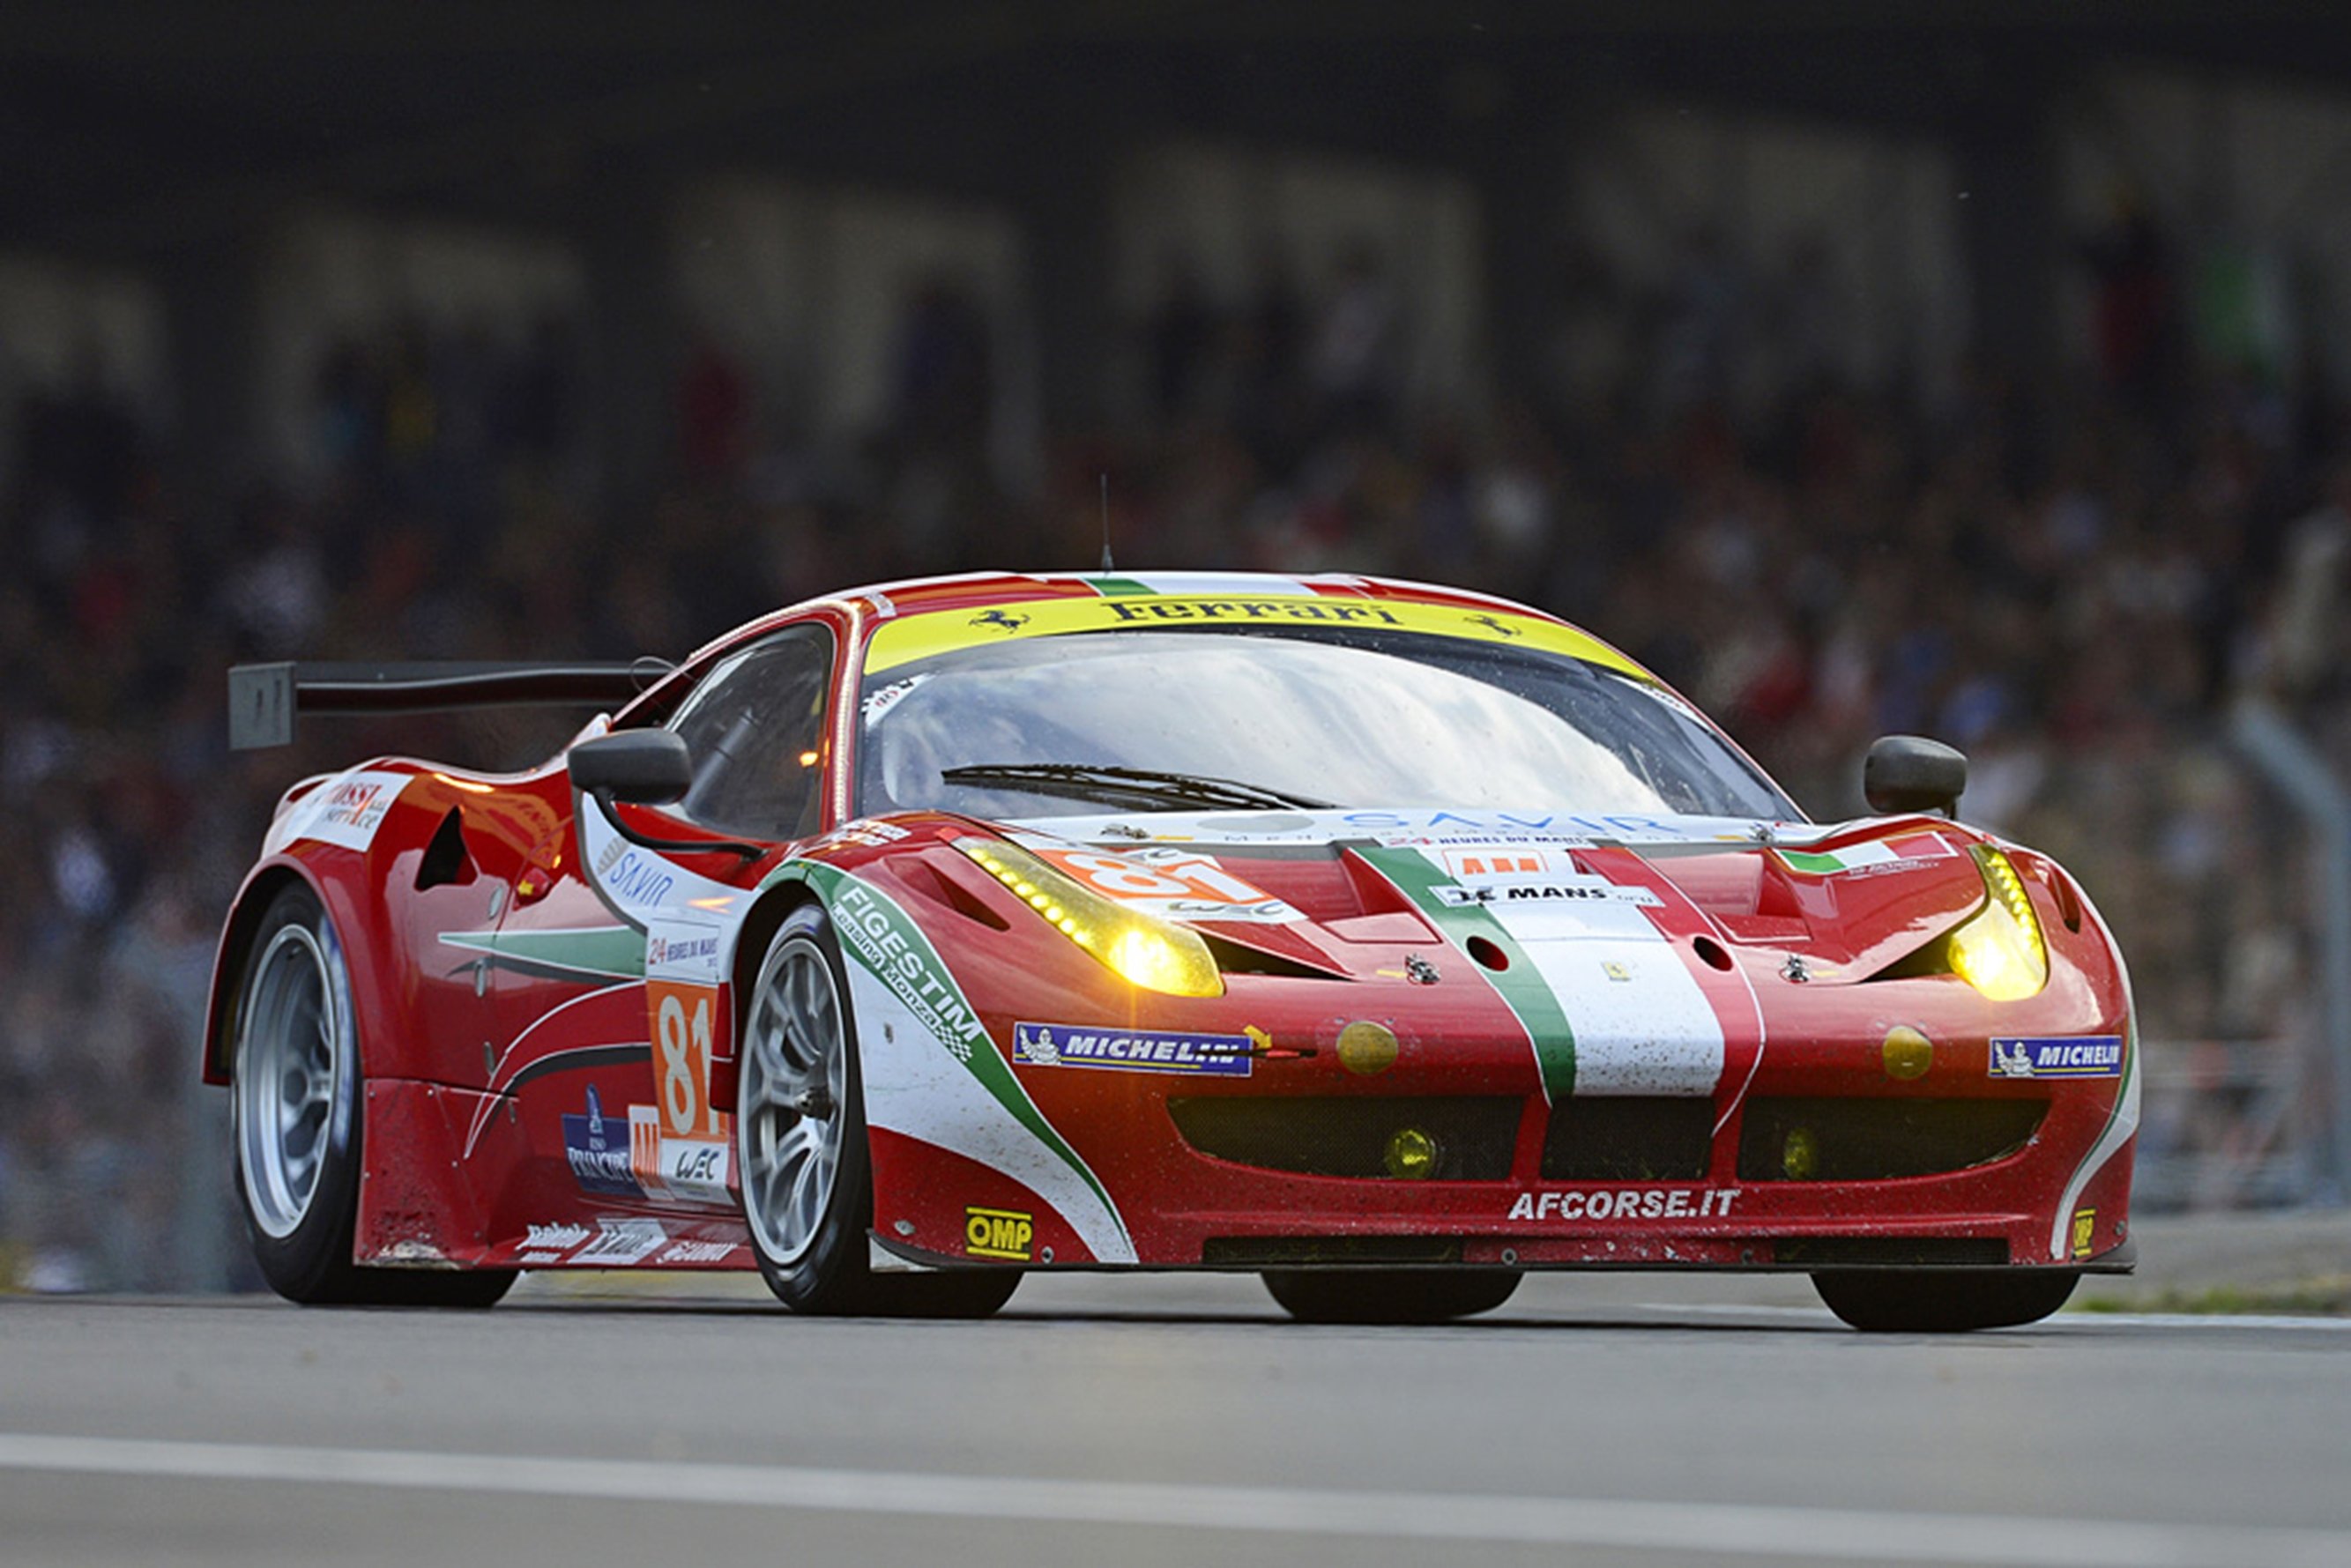 race, Car, Supercar, Racing, Classic, Ferrari, Scuderia, Corso, Red  Wallpapers HD / Desktop and Mobile Backgrounds